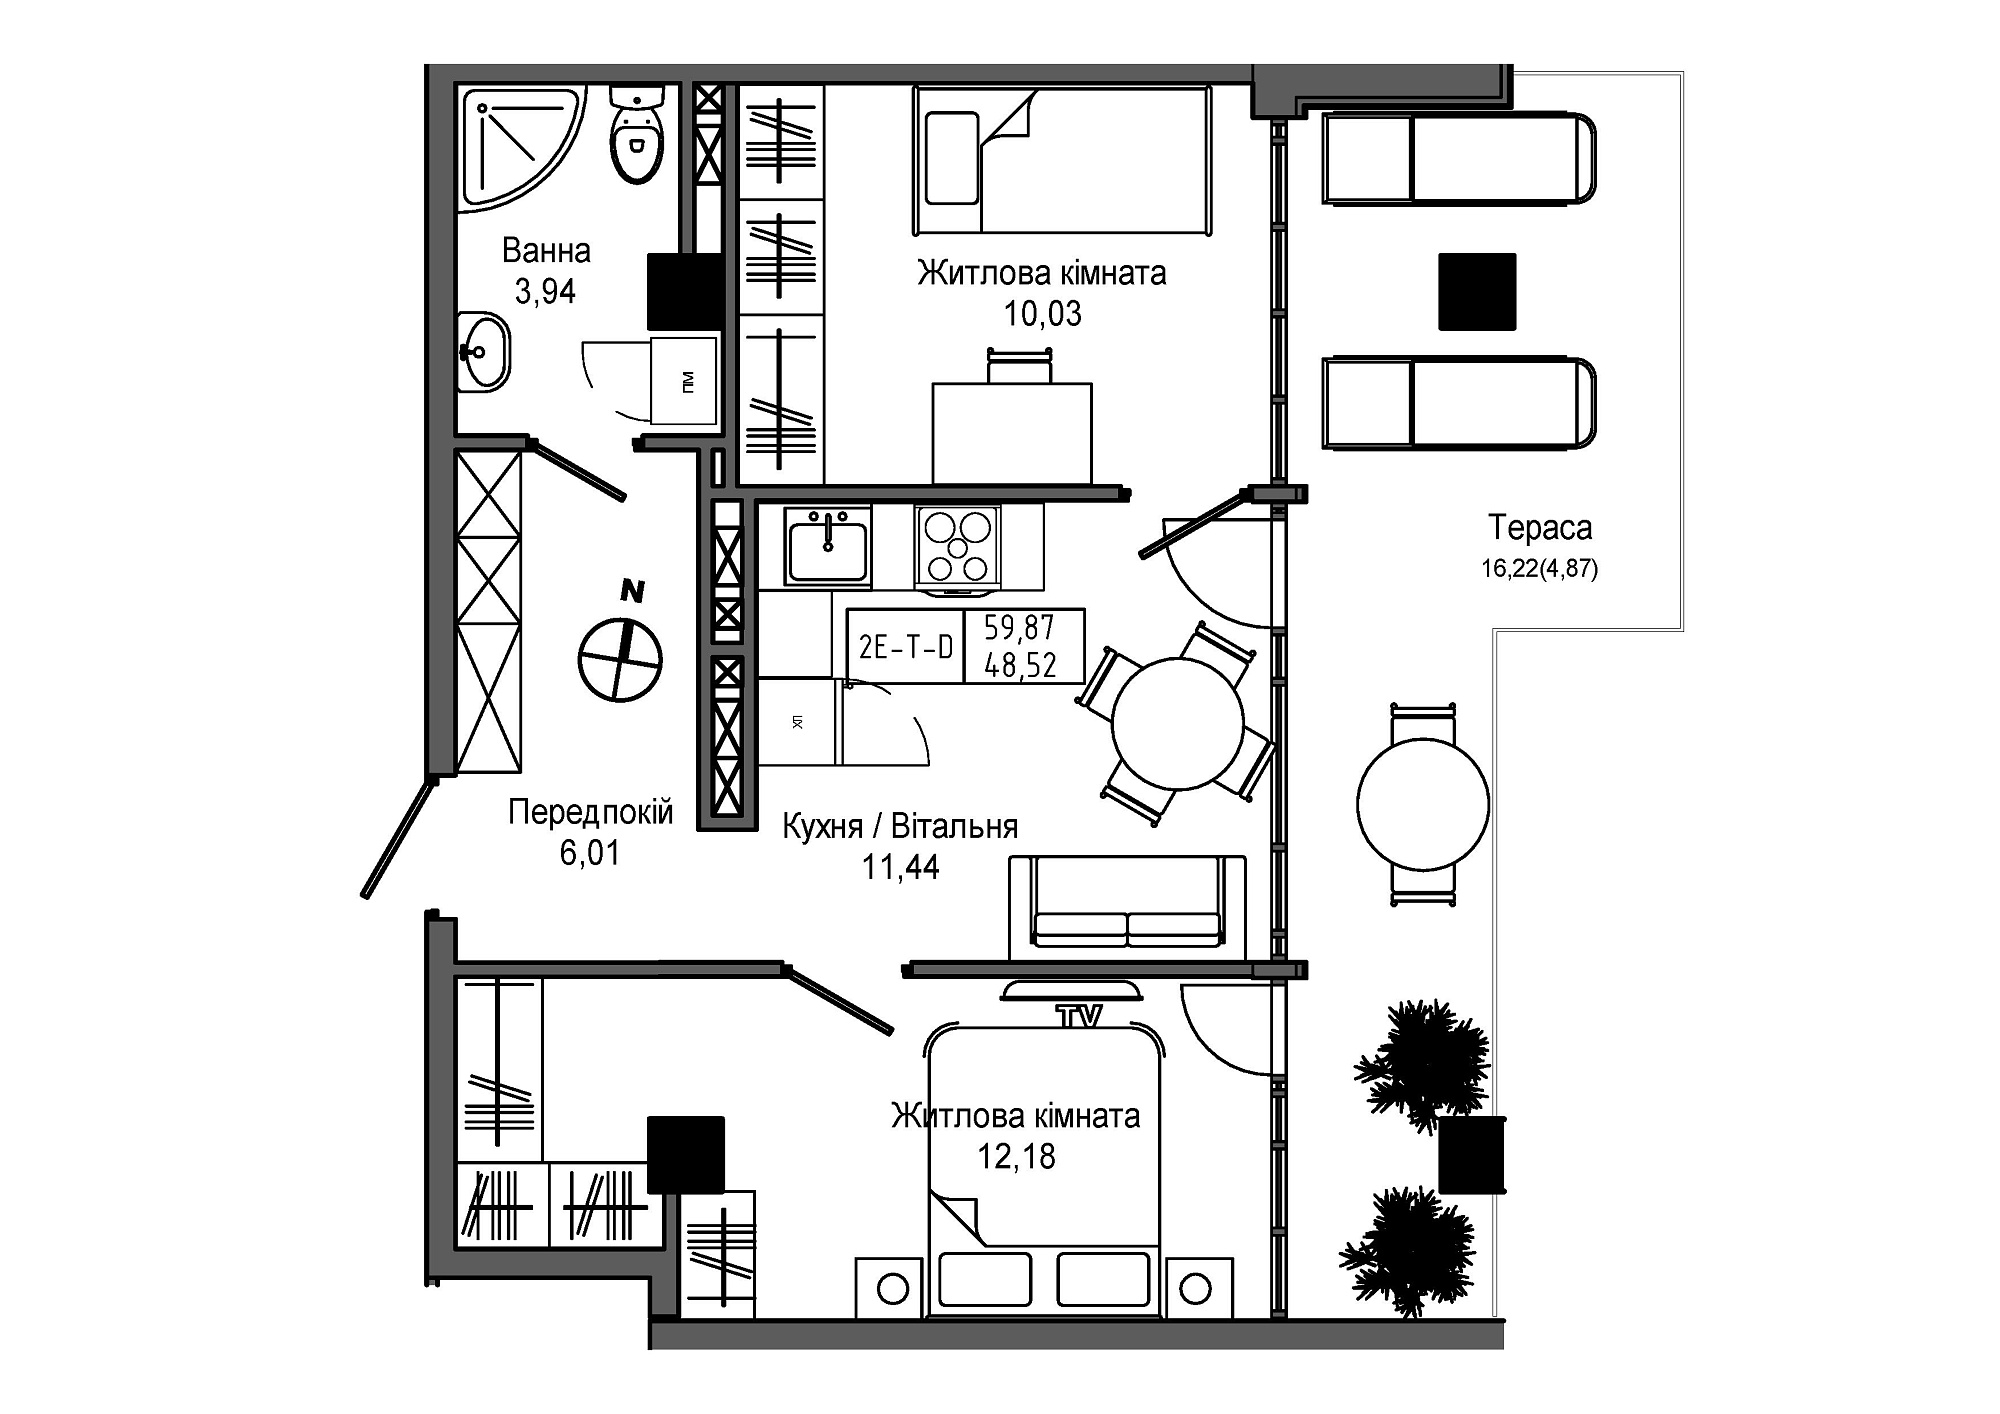 Planning 2-rm flats area 48.52m2, UM-006-09/0023.